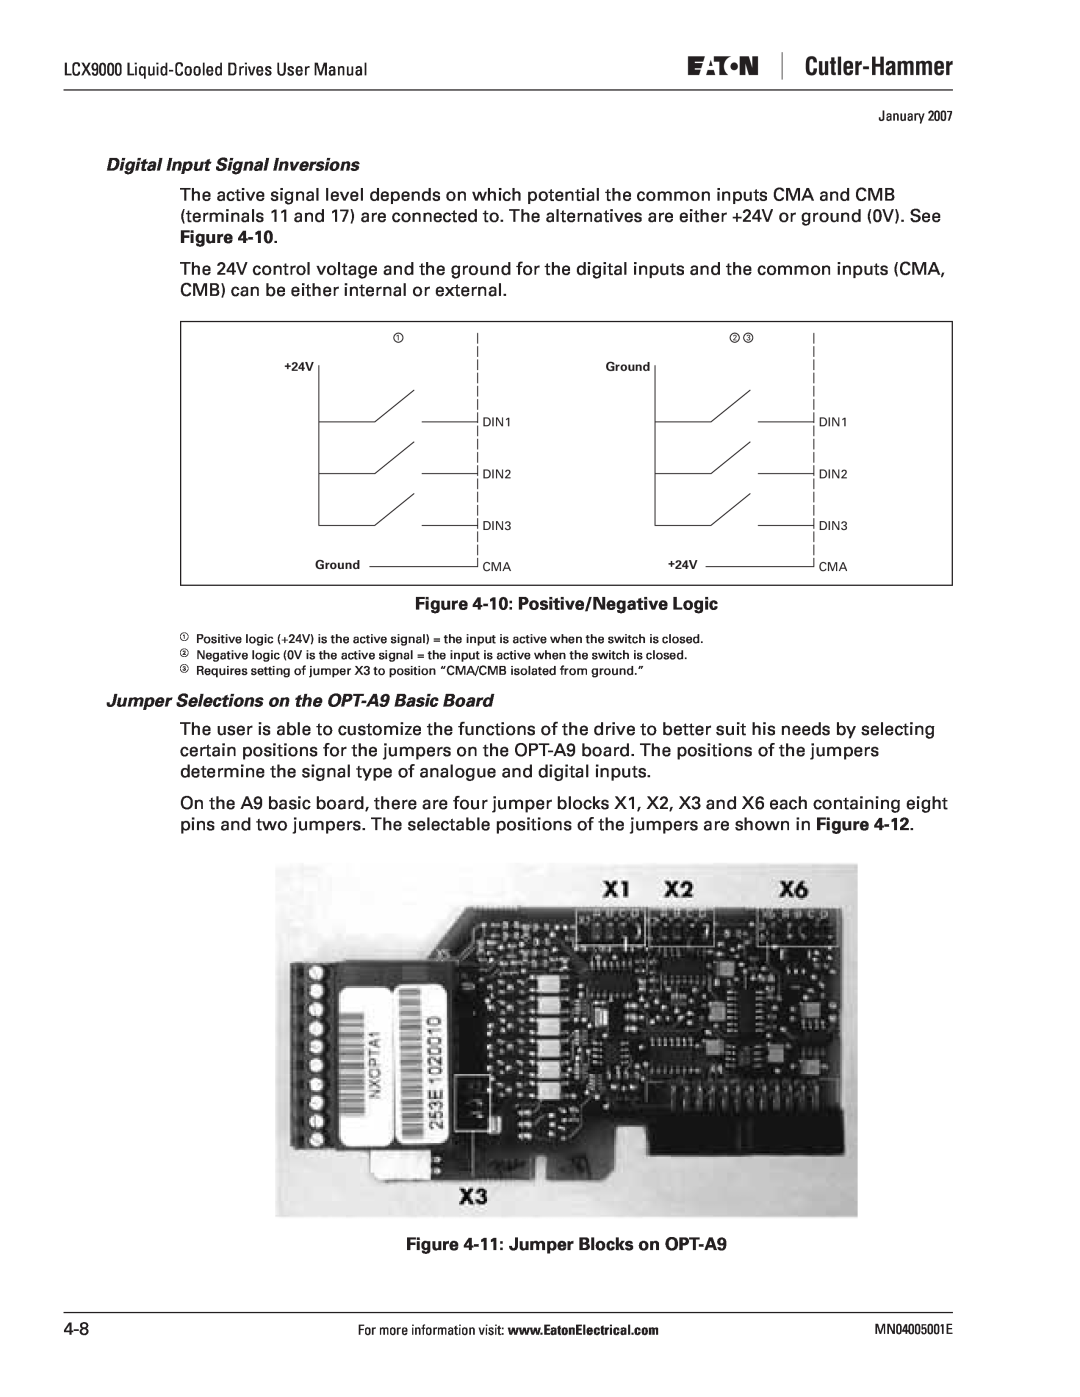 J. T. Eaton LCX9000 user manual Digital Input Signal Inversions, 10 Positive/Negative Logic, 11 Jumper Blocks on OPT-A9 